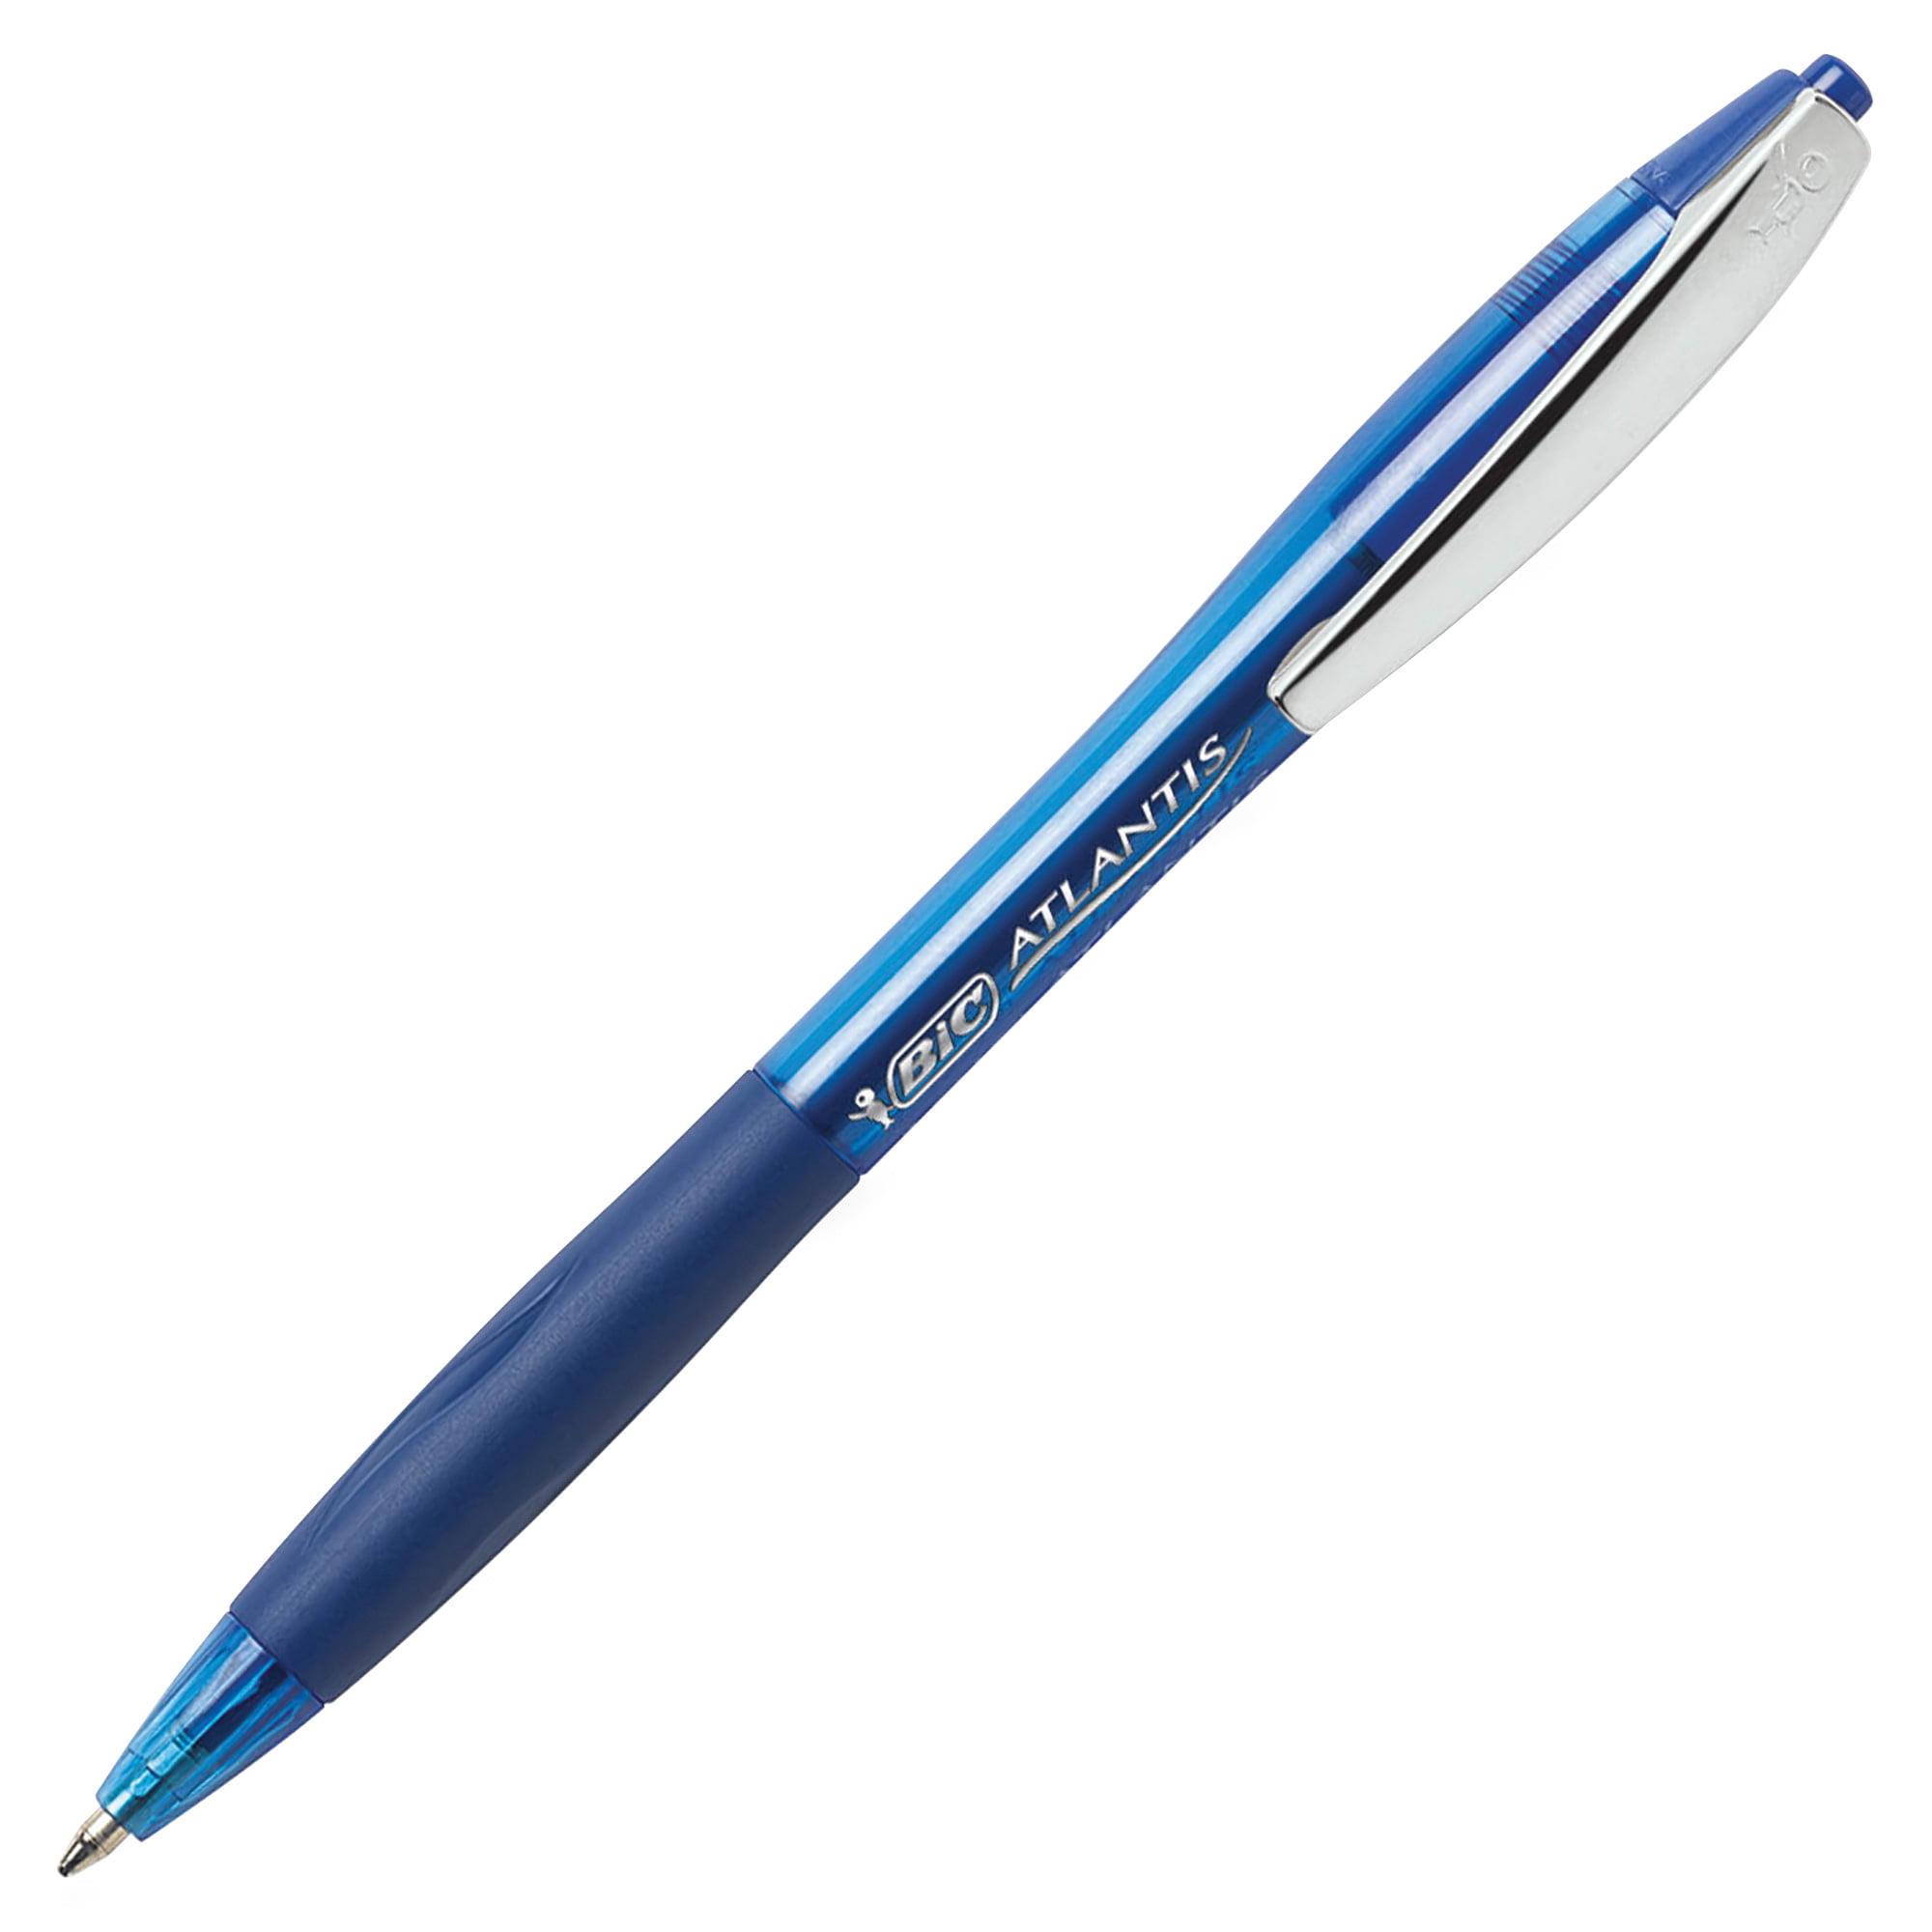 Medium Point VCG11-BLUE Atlantis Original Retractable Ball Pen Blue 12-Count 1 Set of 12-Count 1.0 mm 